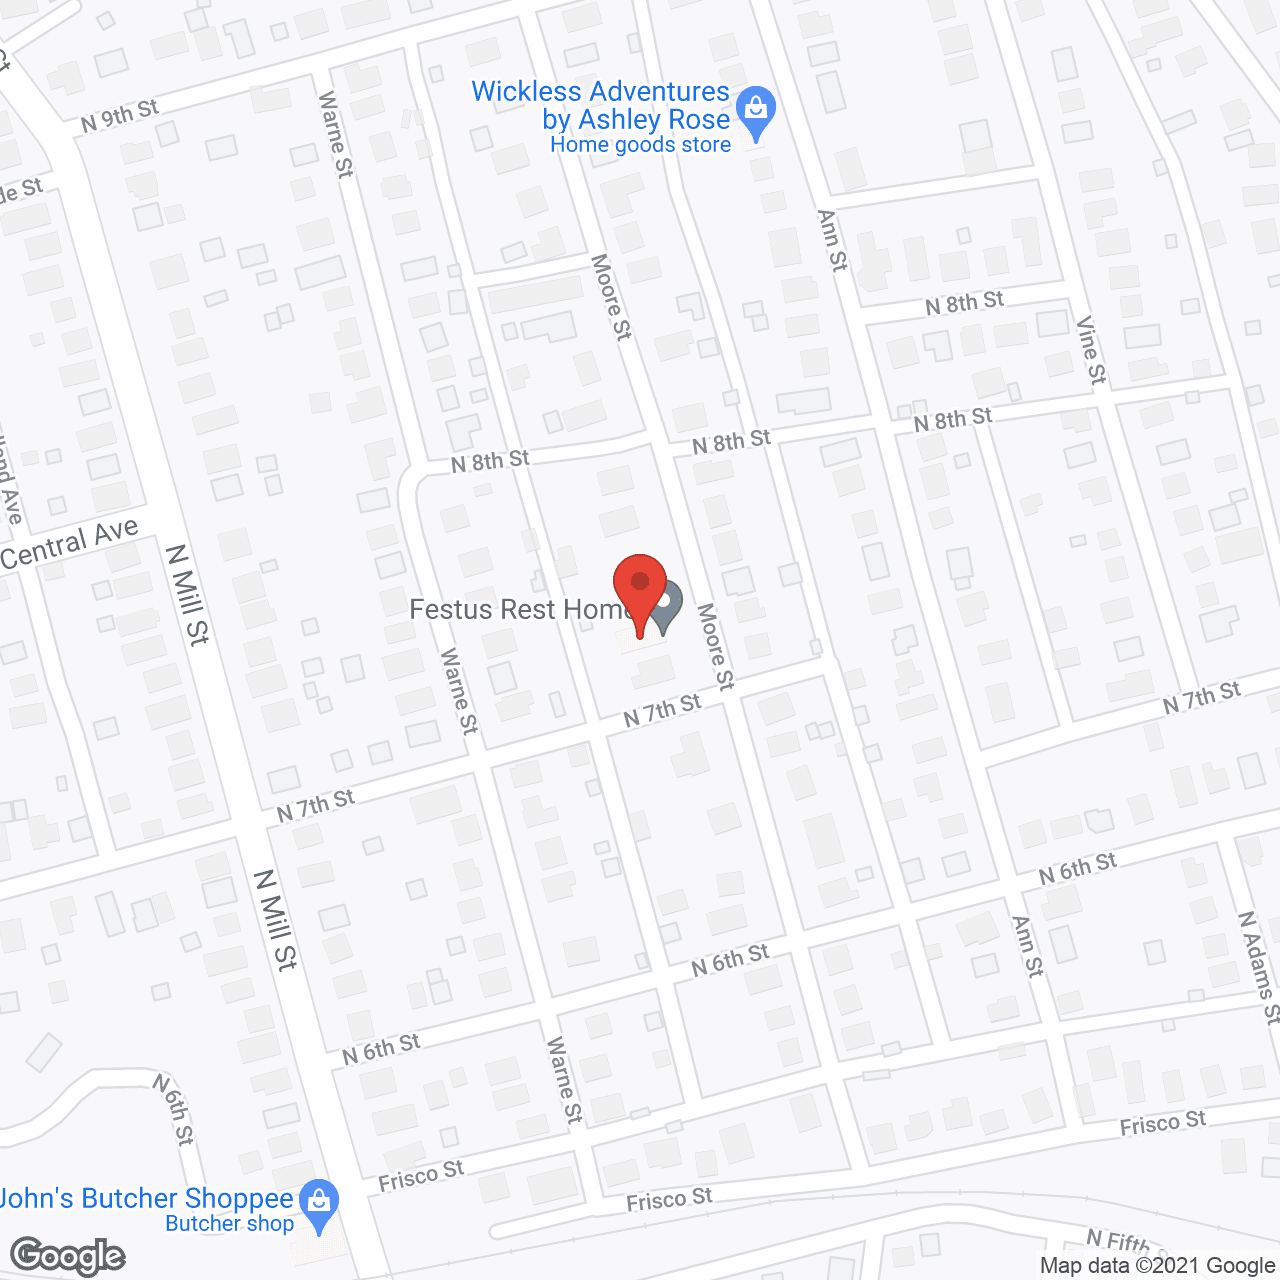 Festus Rest Home in google map